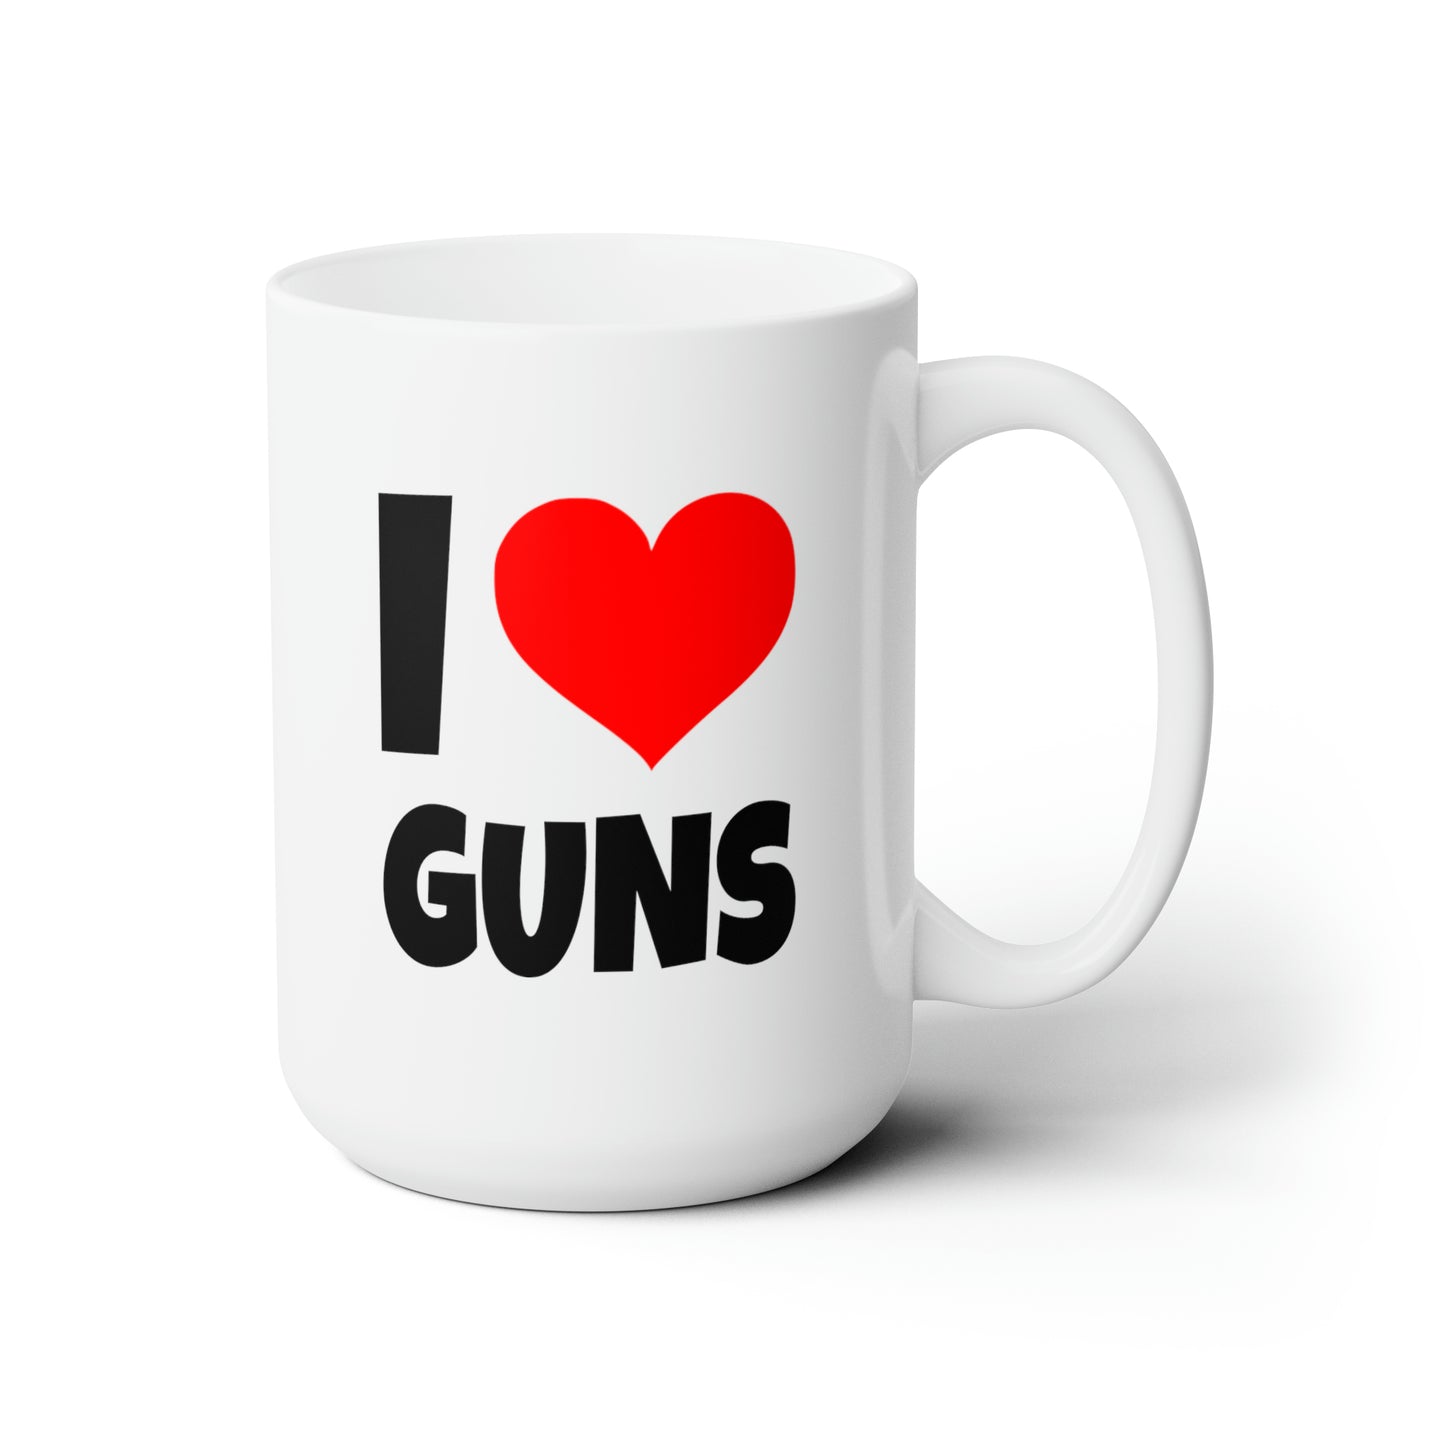 I Love Guns - Coffee Mug